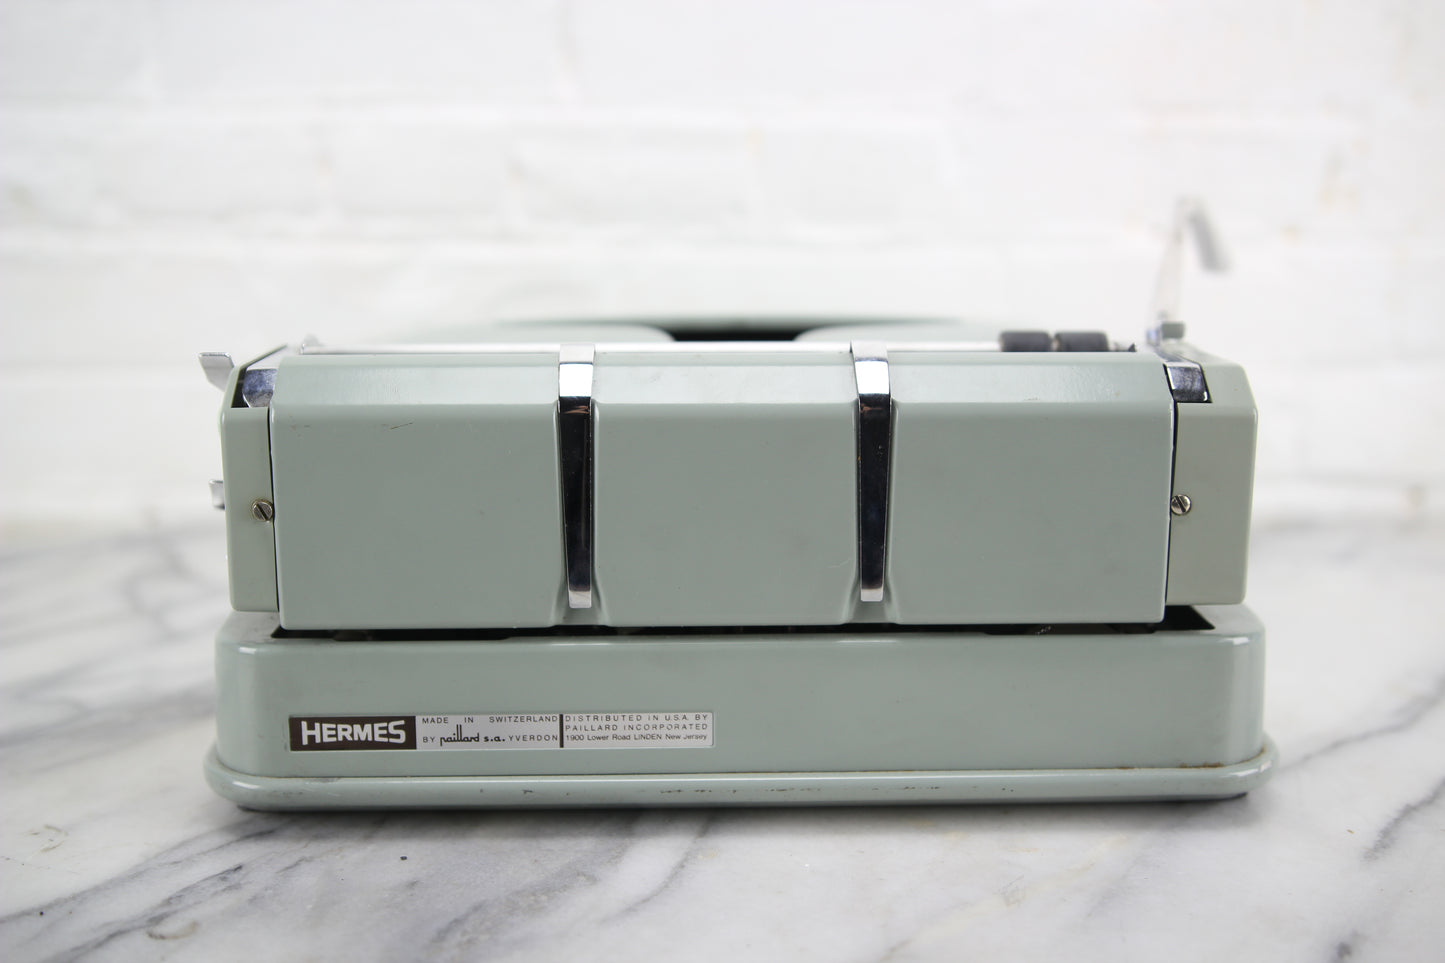 Hermes 3000 Portable Seafoam Green Typewriter with Case, Made in Switzerland, 1967